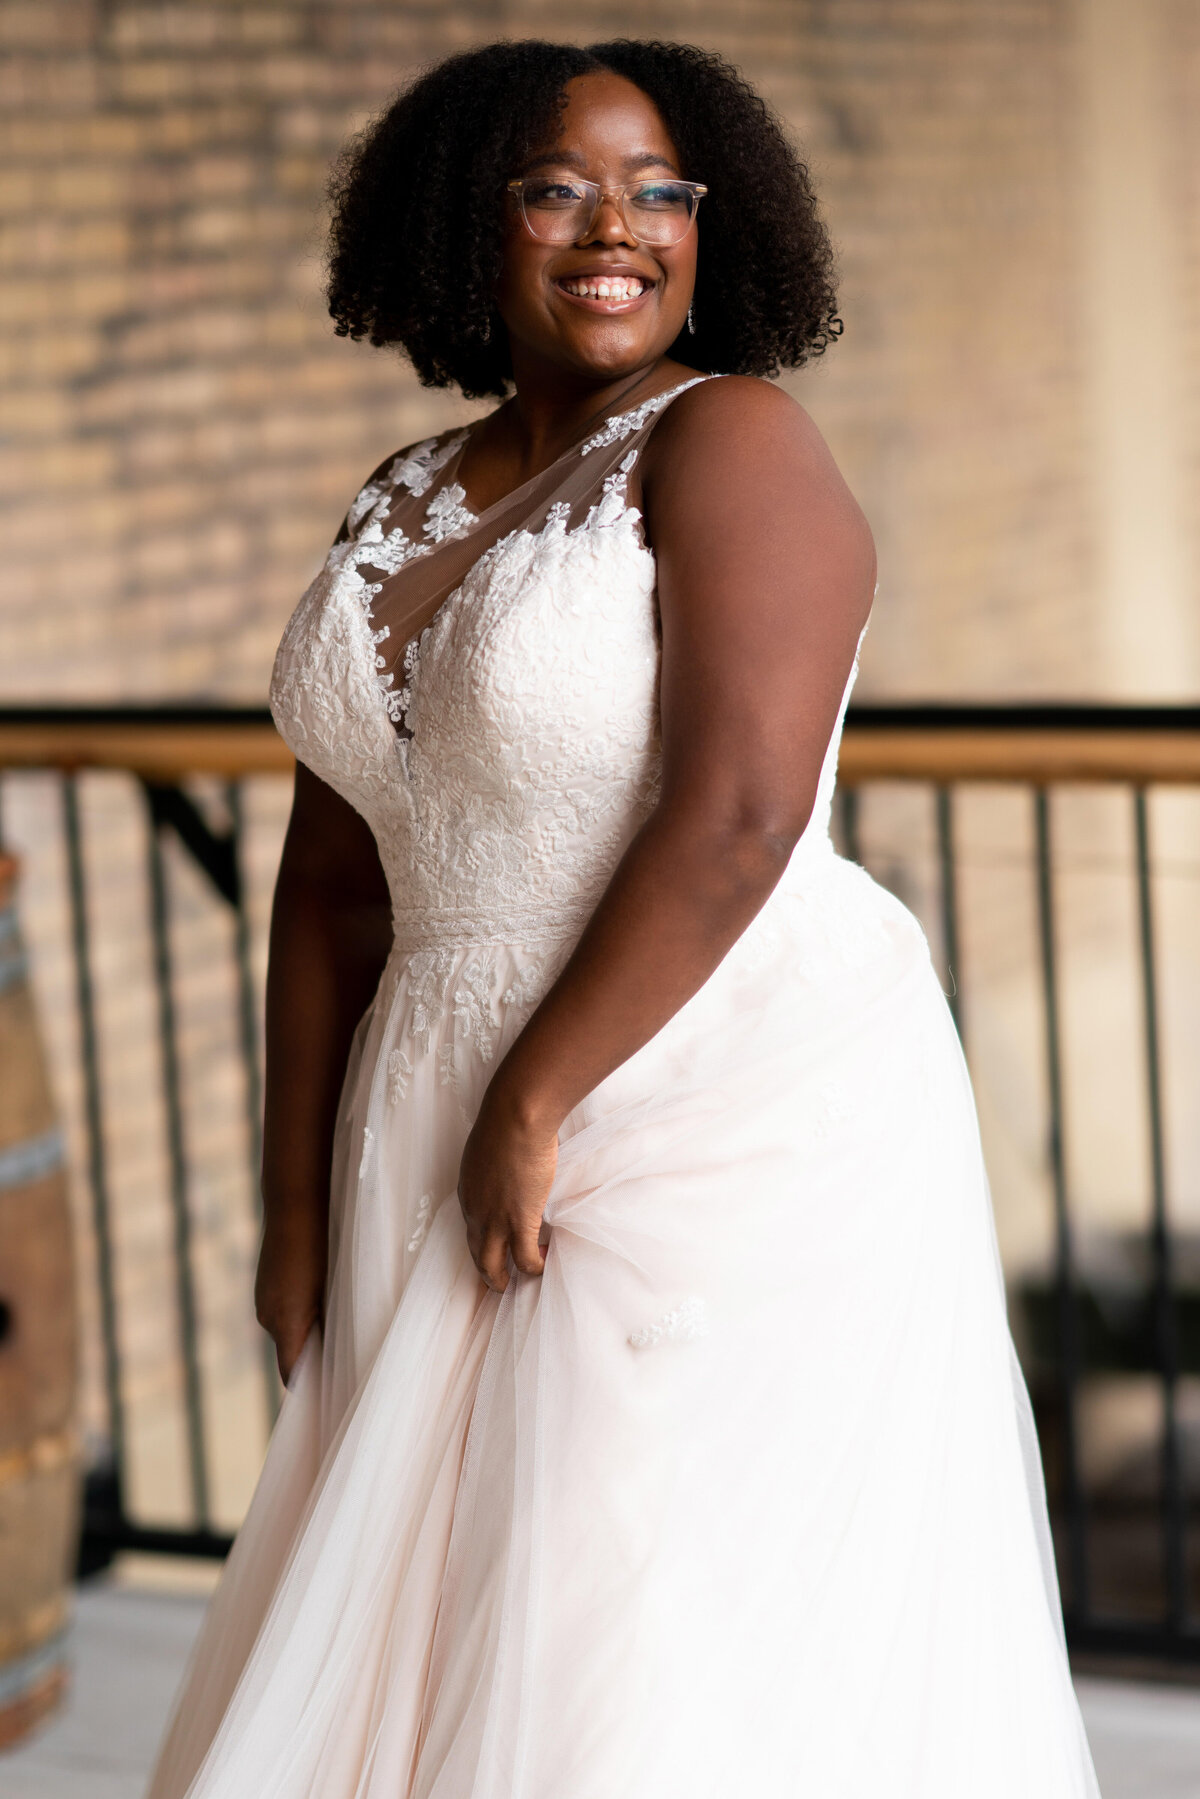 Luxe Bridal - Plus Size Bridal Shop - Minnesota Wedding Photography - RKH Images (163 of 331)